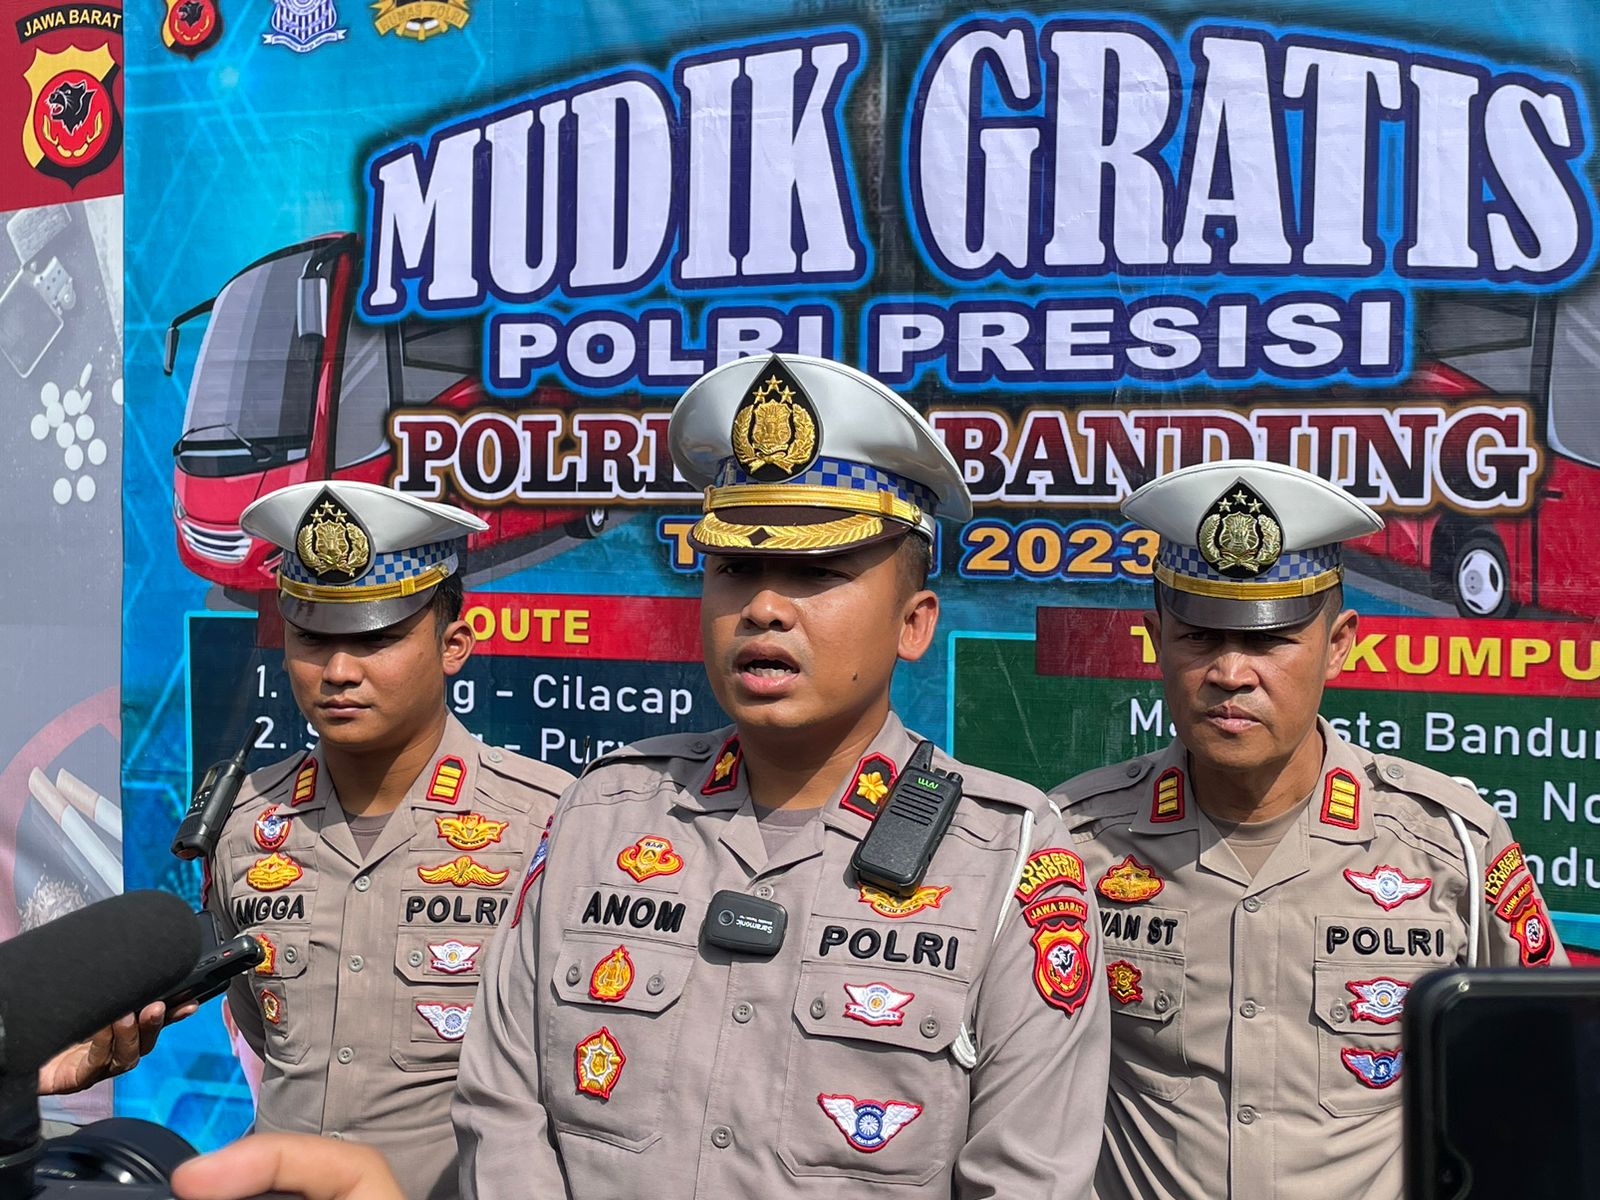 Polresta Bandung Sediakan 200 Kursi Mudik Gratis